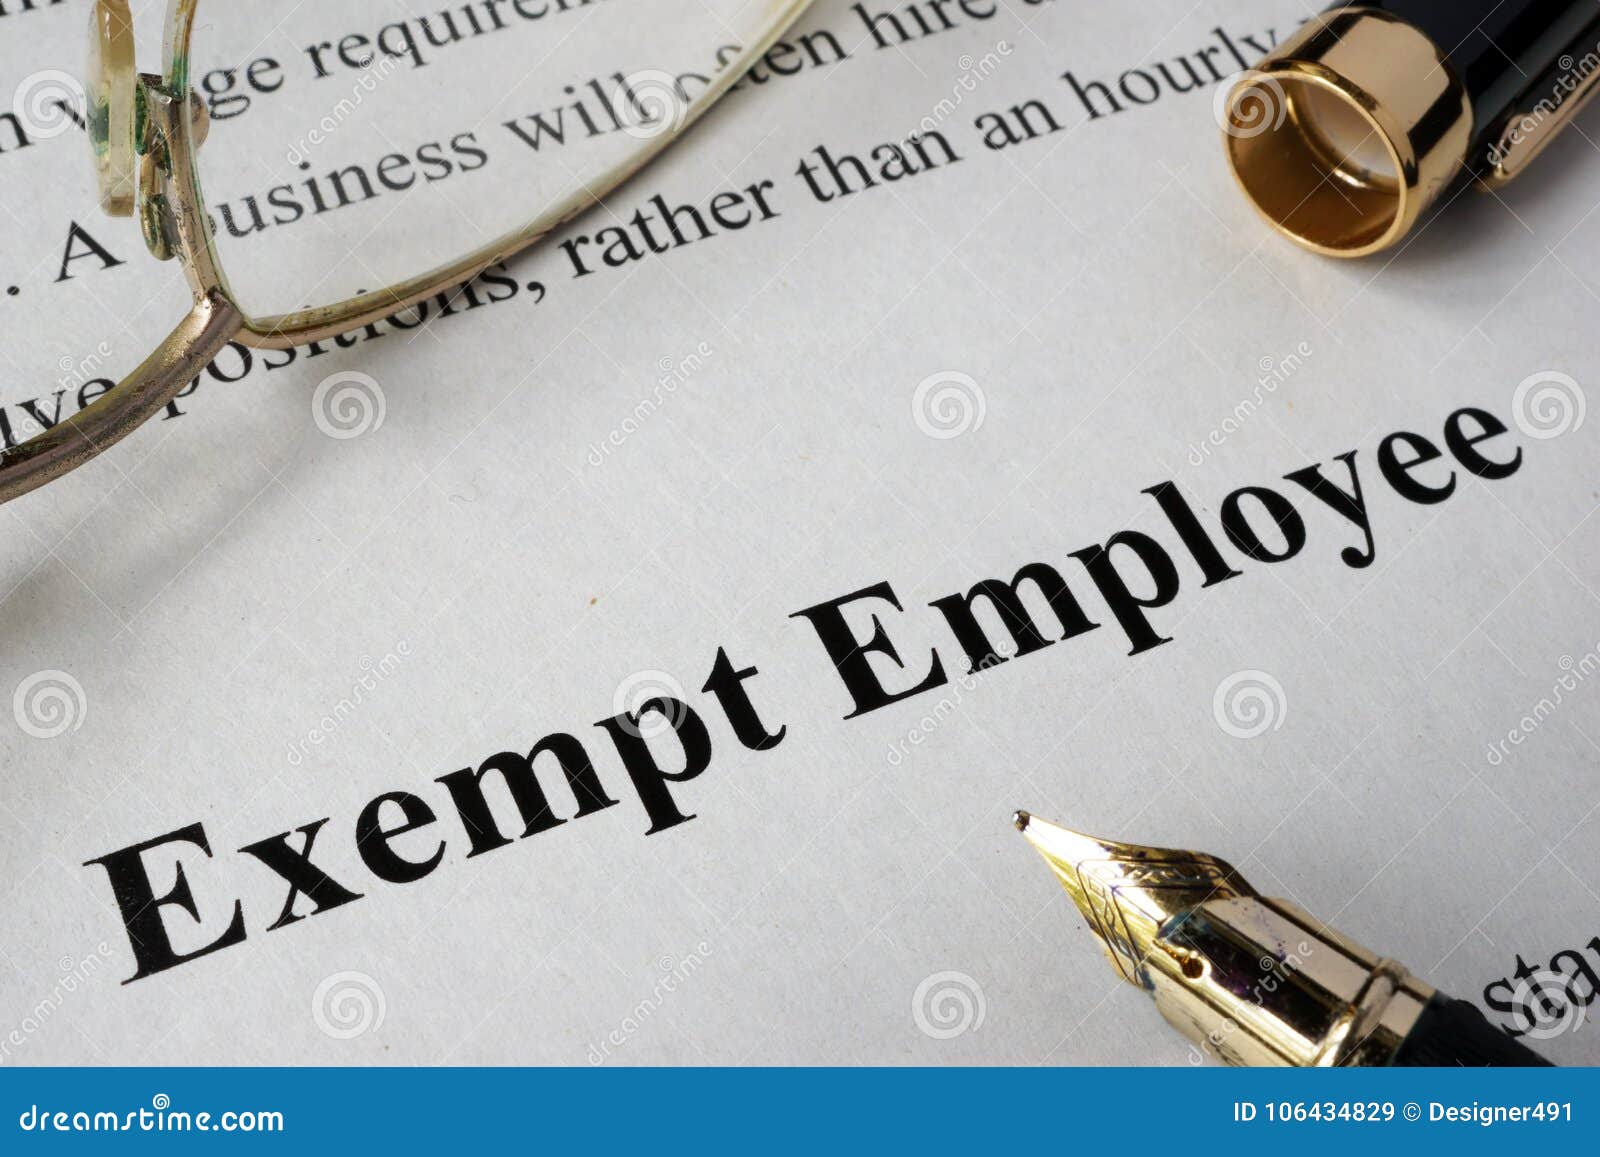 exempt employee concept written on paper.